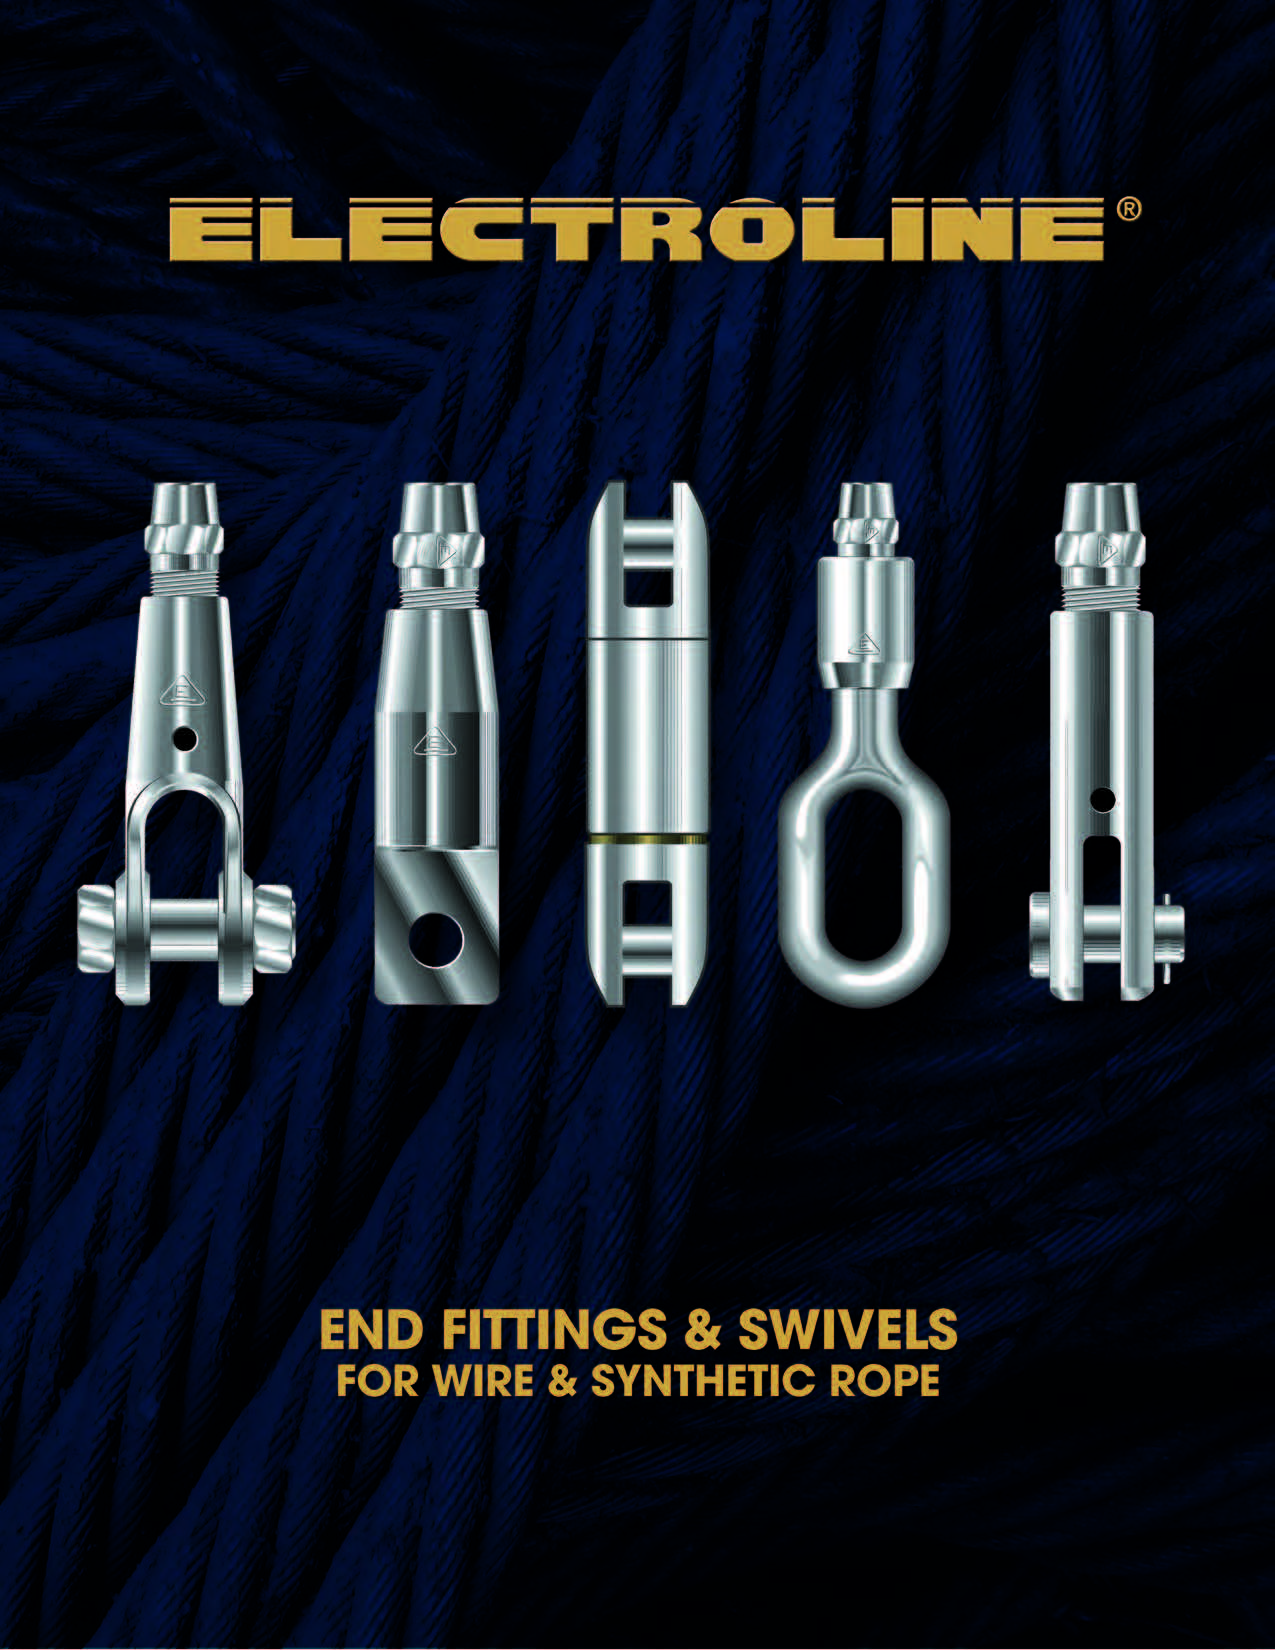 Esmet/Electroline end fittings, swivels, and turnbuckles